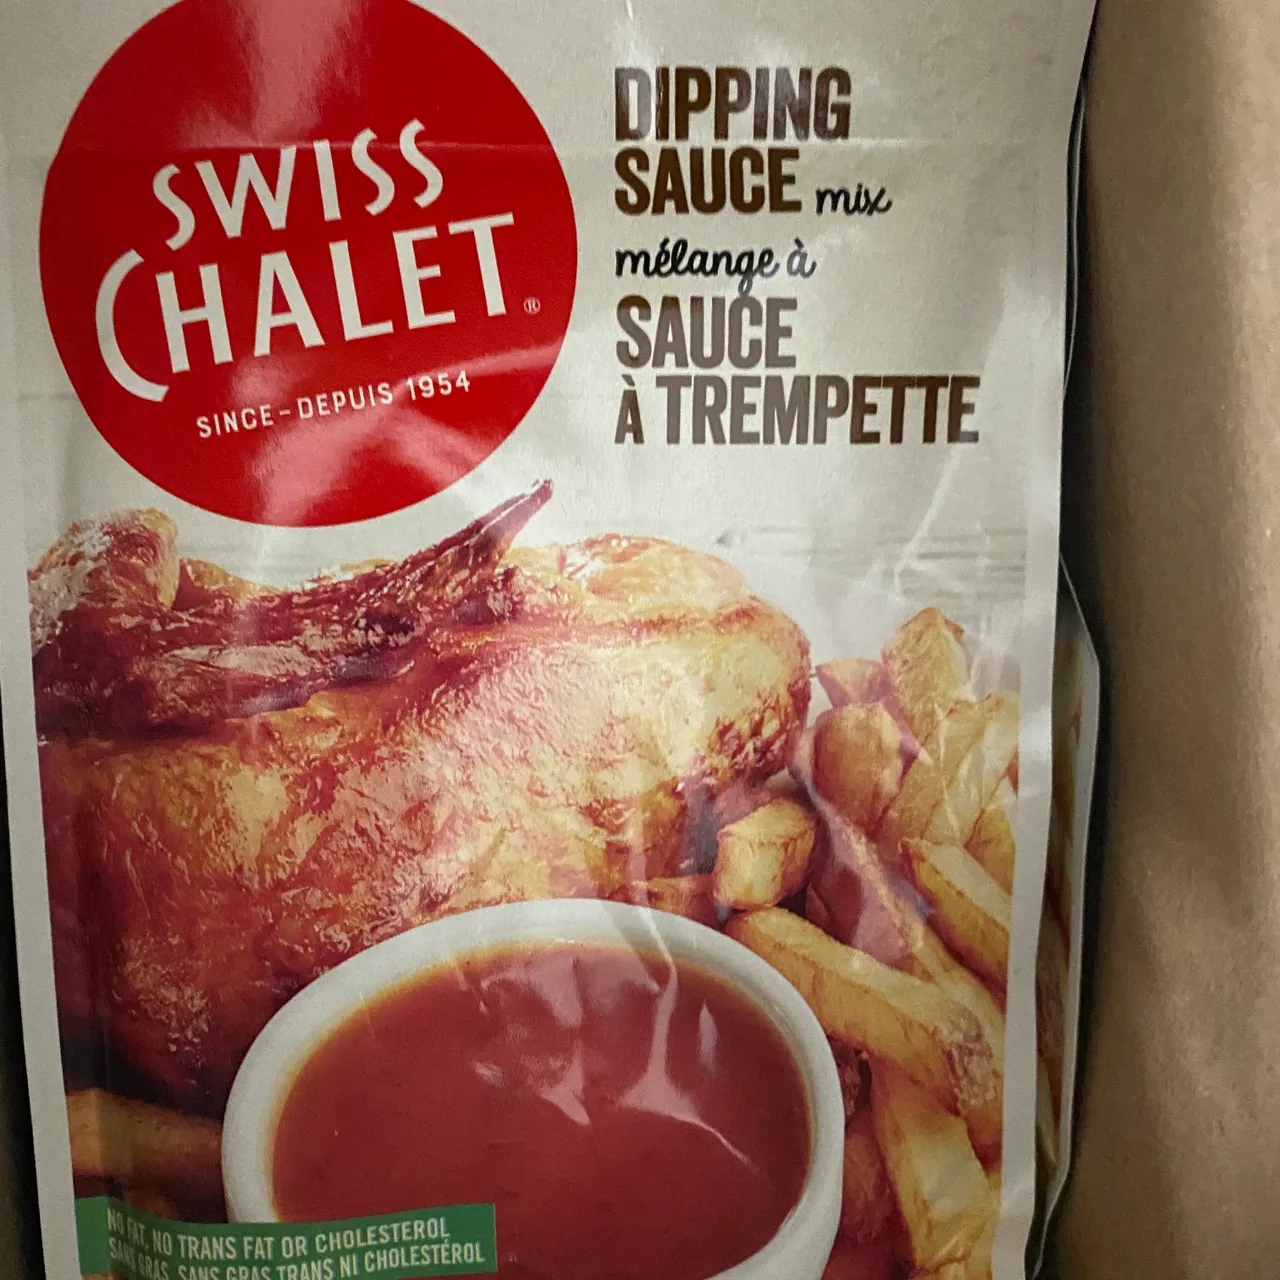 Swiss Chalet Dipping Sauce Mix photo 1